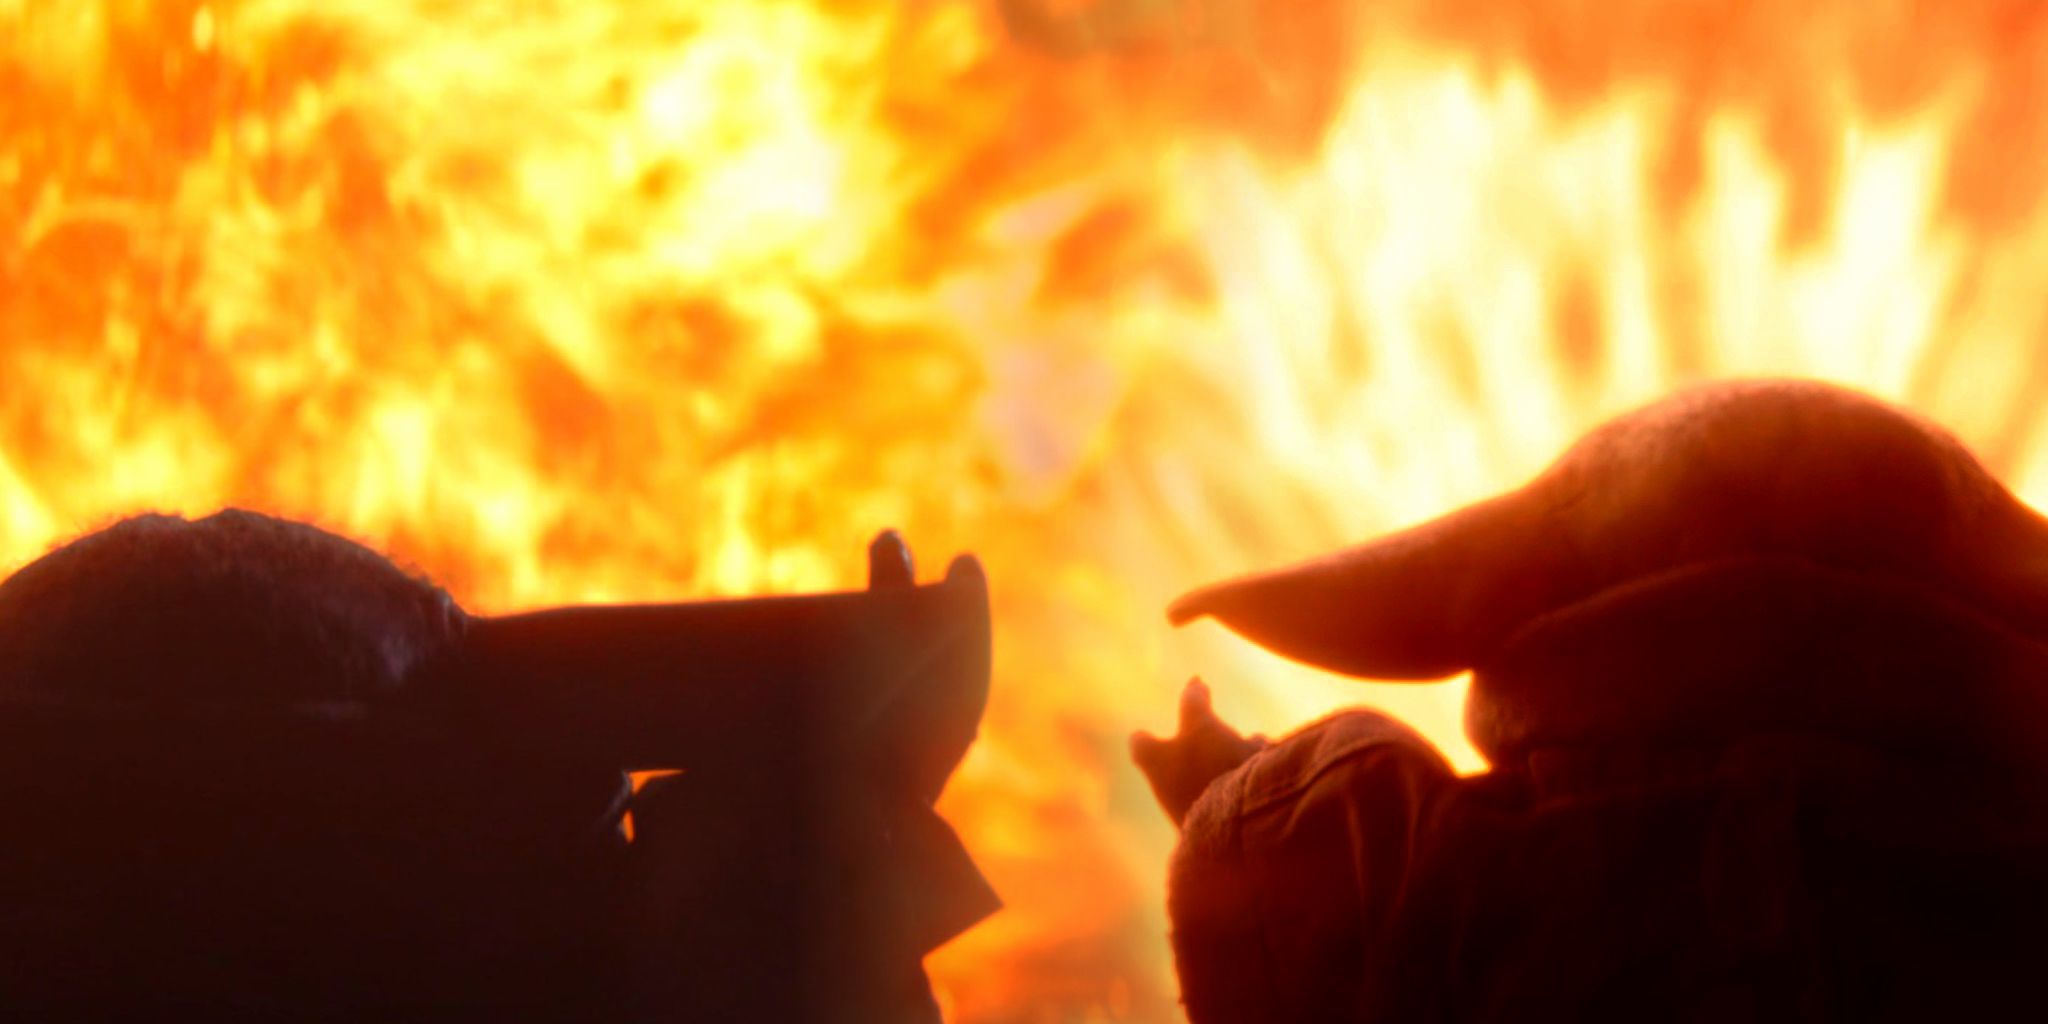 Grogu holds back fire in both The Mandalorian season 1 and season 3